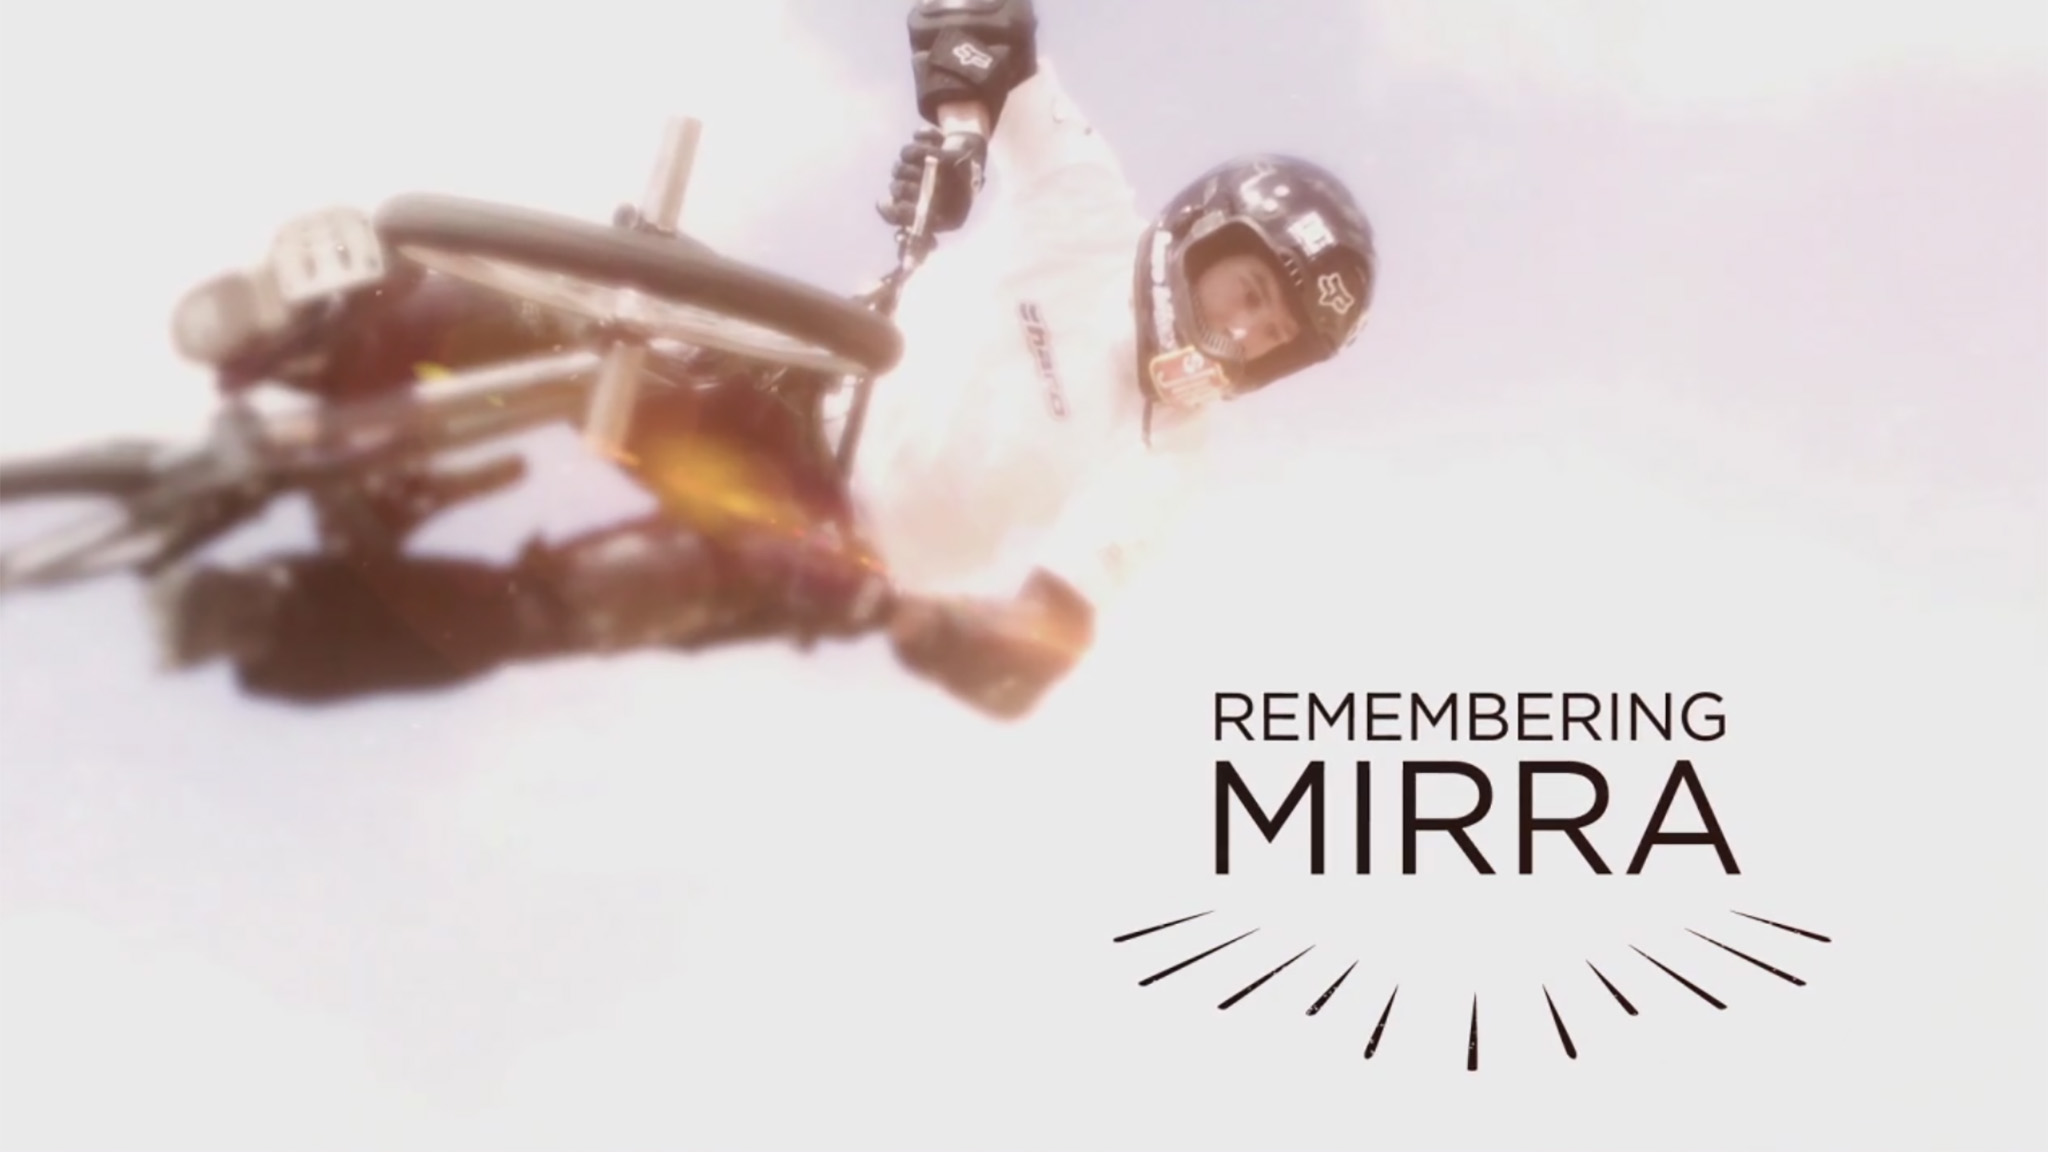 Haro to release Dave Mirra tribute bike in 2017 - ESPN